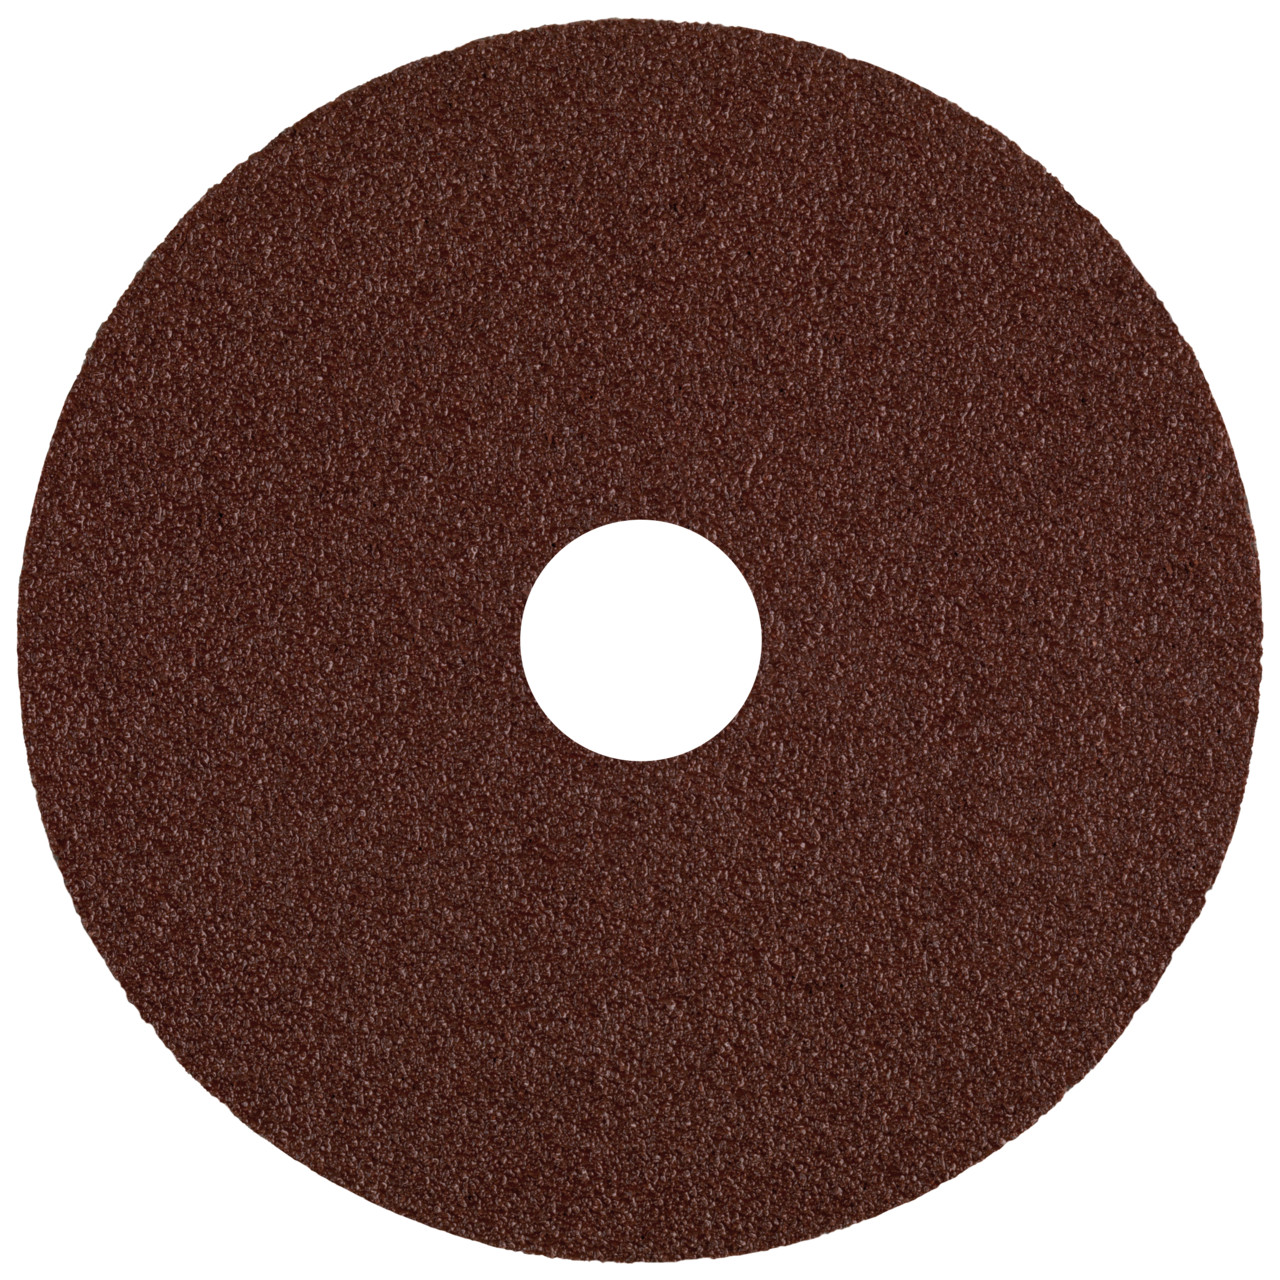 Tyrolit A-B02 V Vulcanised fibre disc DxH 180x22 For steel, non-ferrous metals and wood, P50, shape: DISC, Art. 34286706